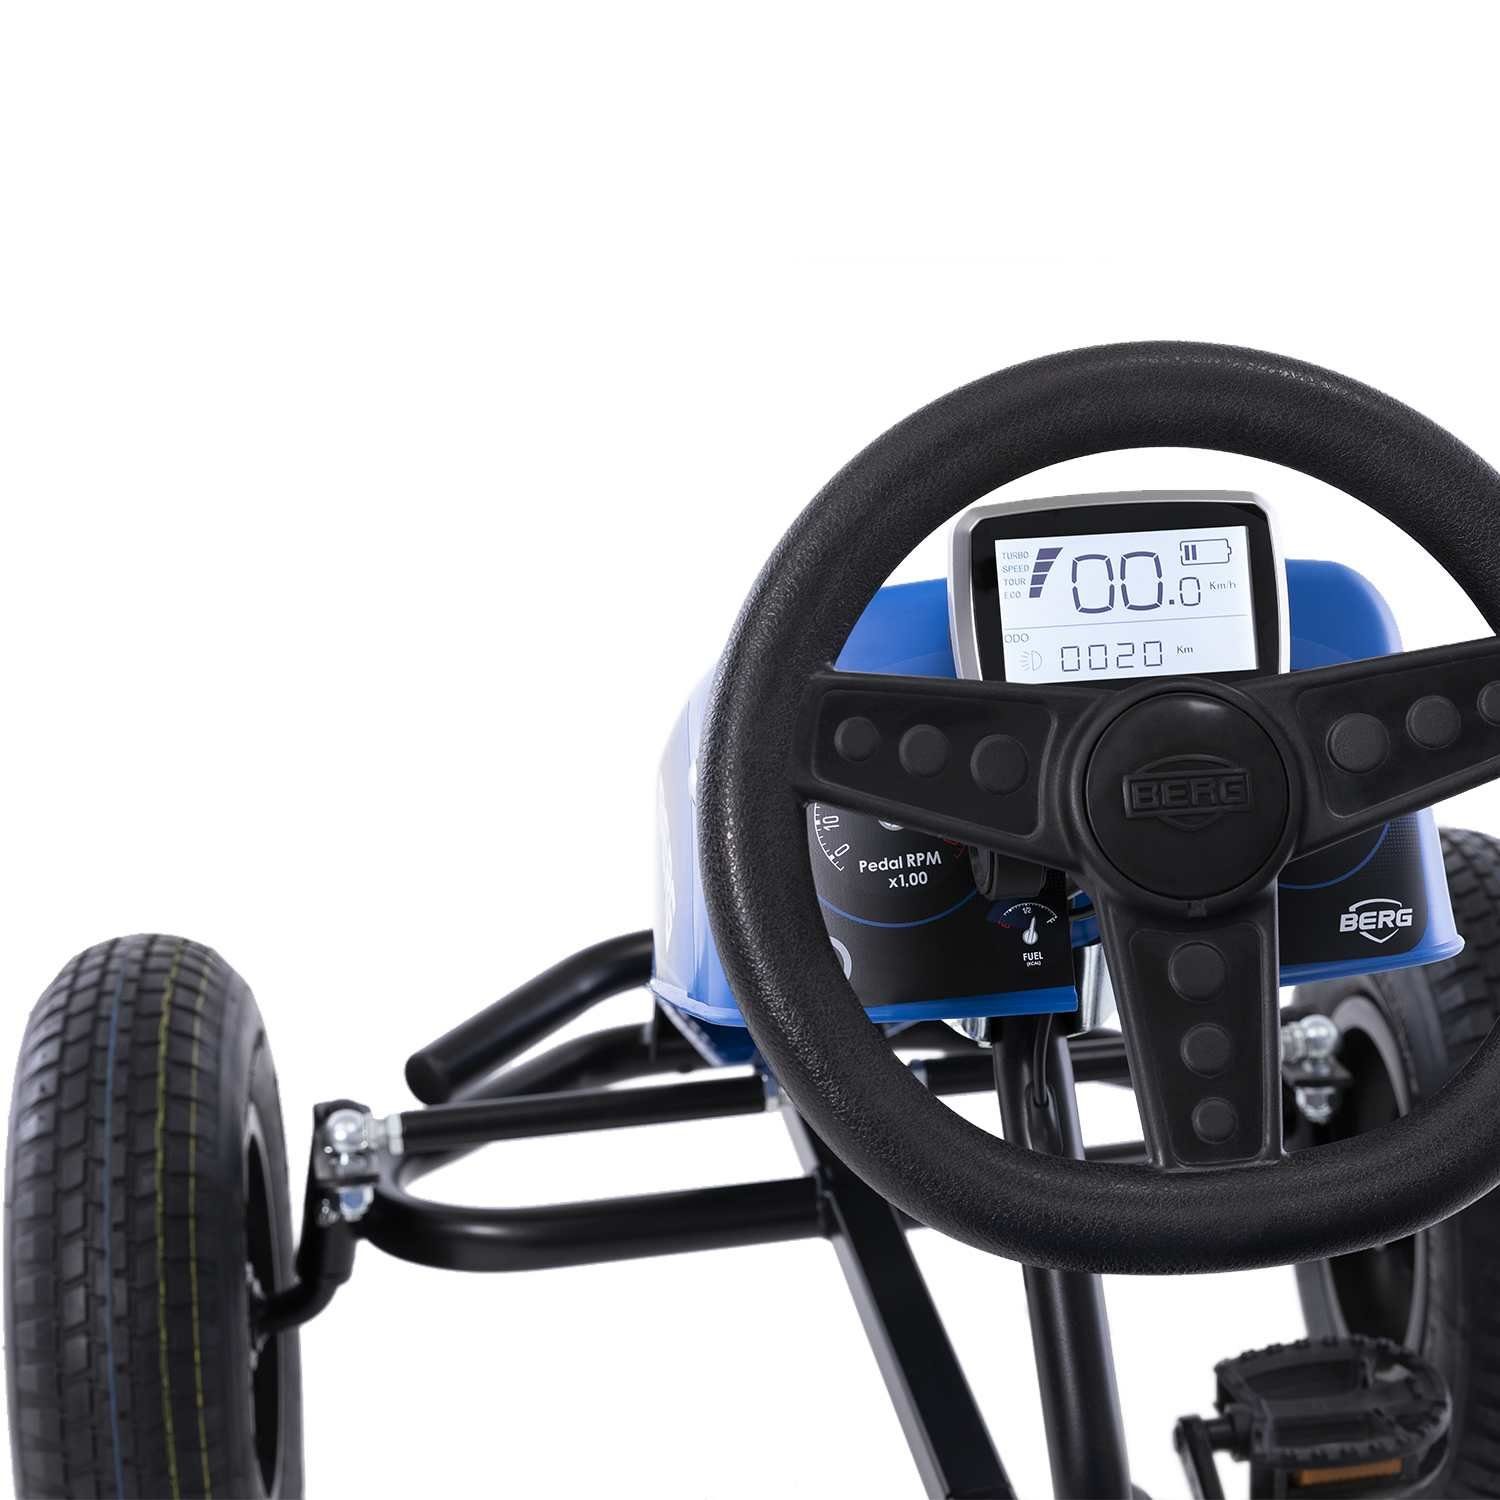 Hybrid Dreigangschaltung BERG Black schwarz Berg mit E-Motor Go-Kart Gokart Edition